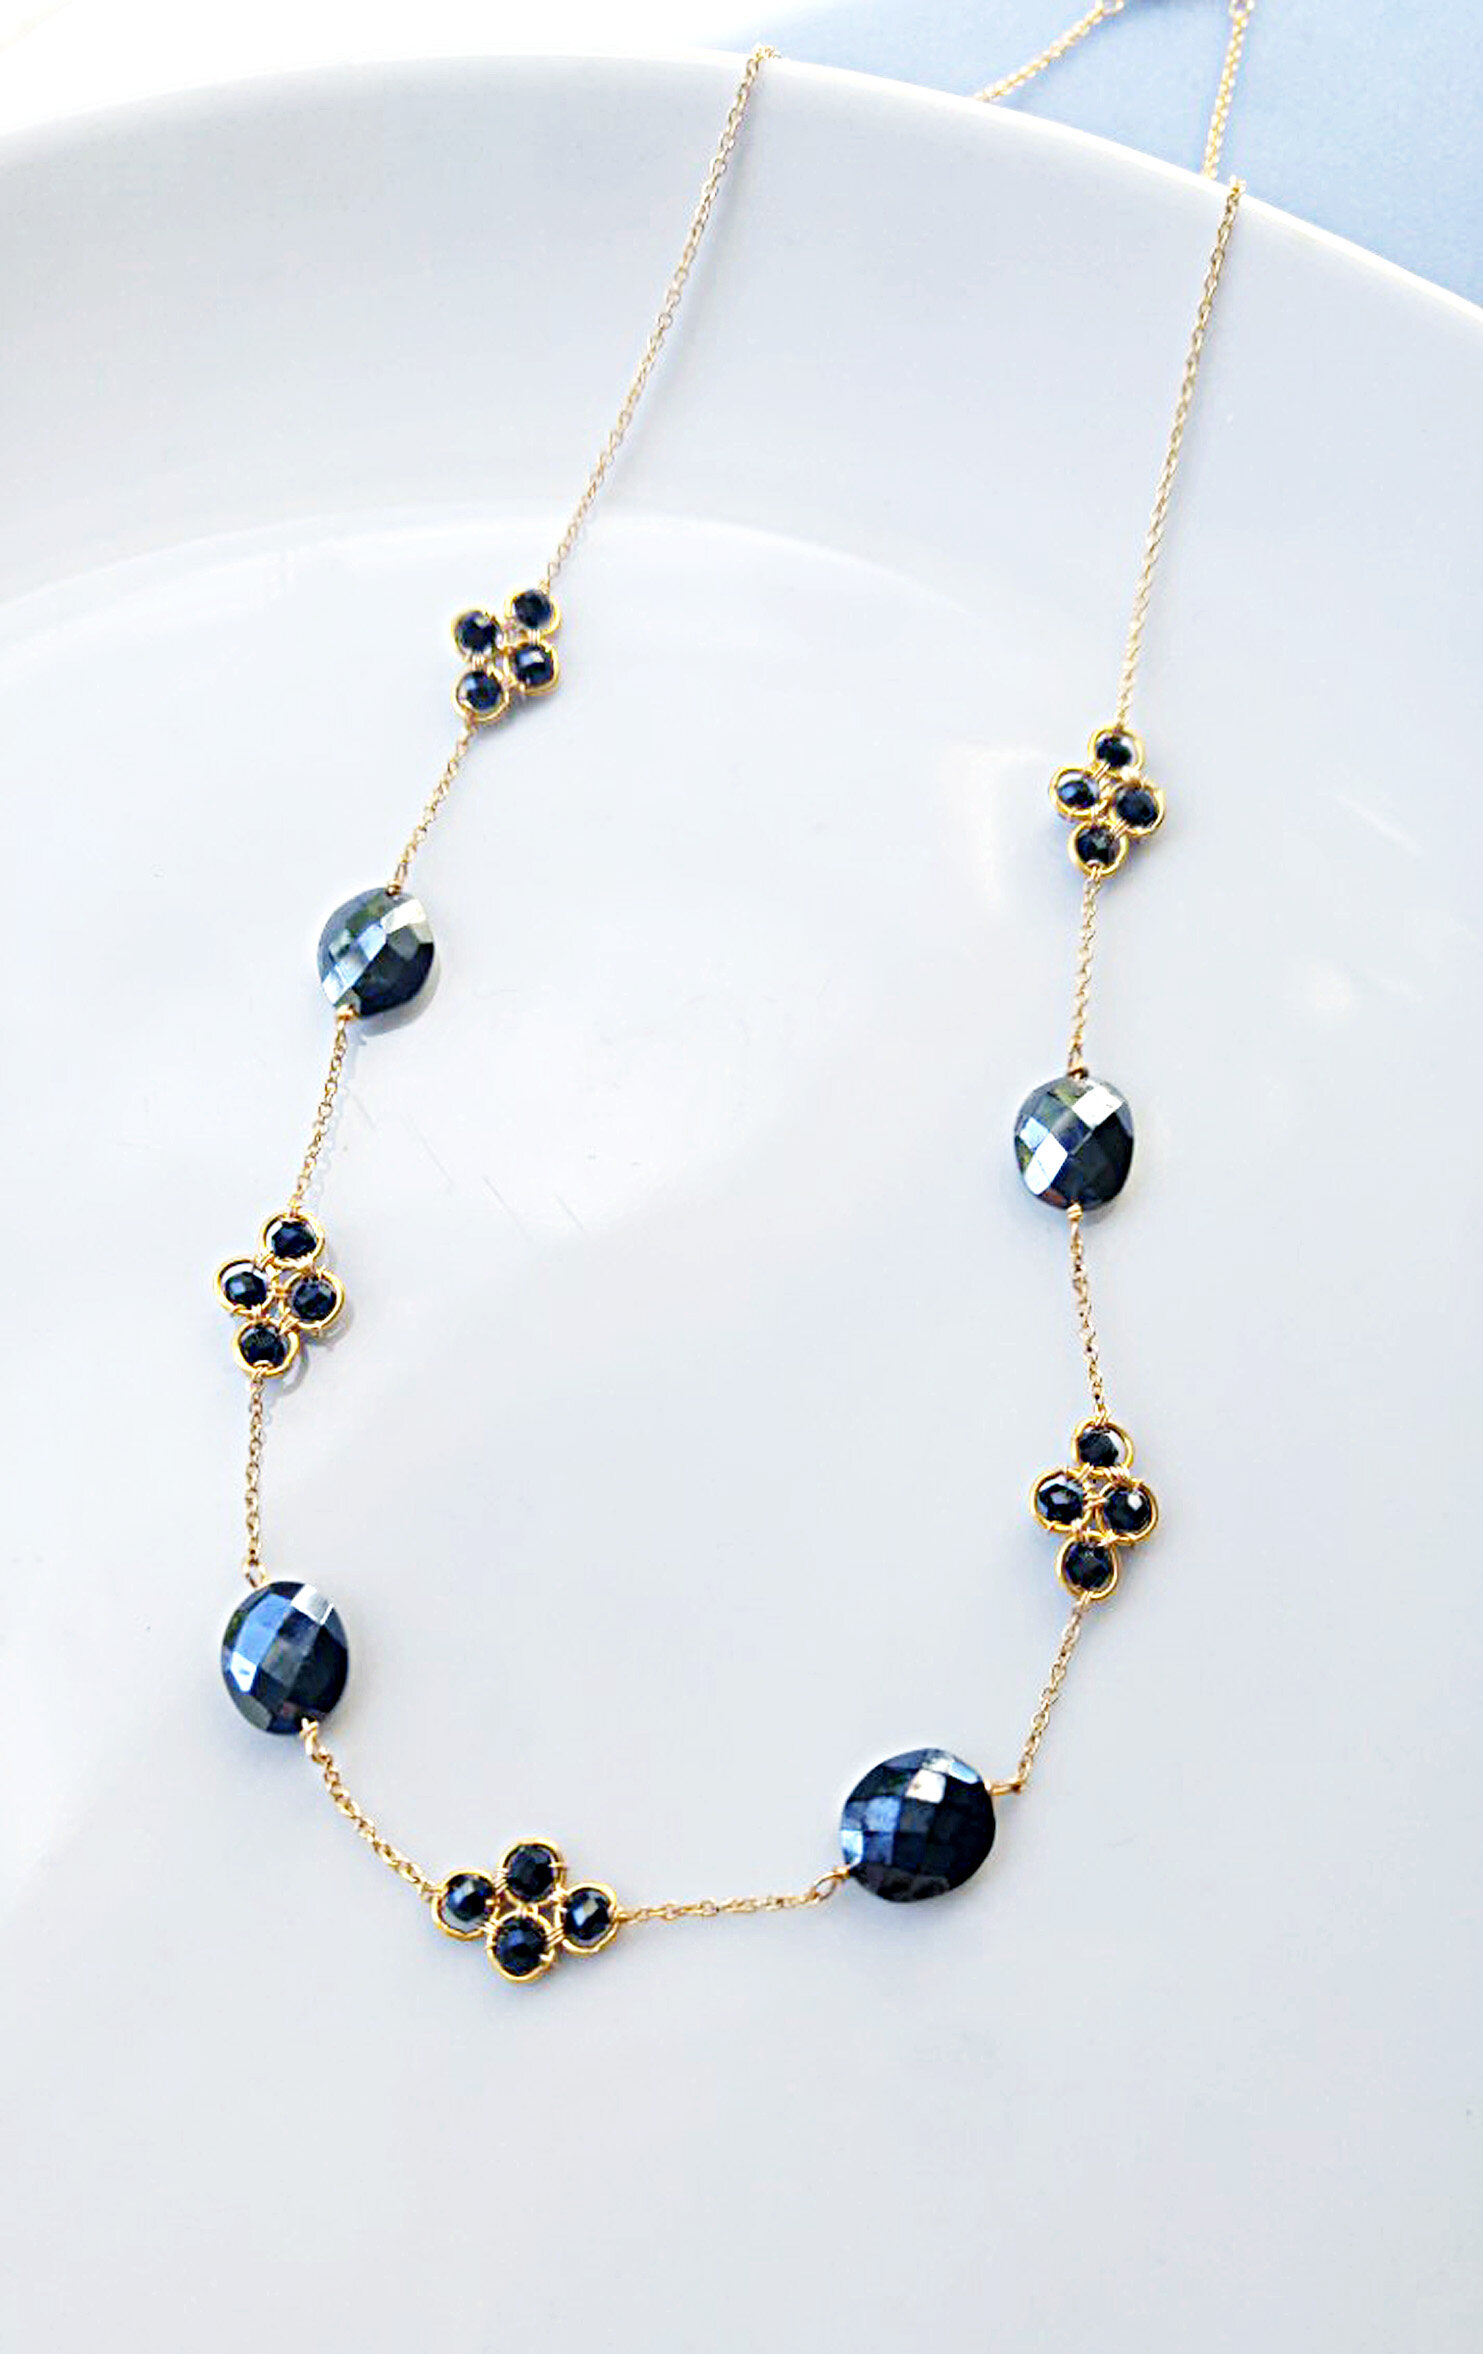 Black Enamel Clover & Initial Necklace (Gold)